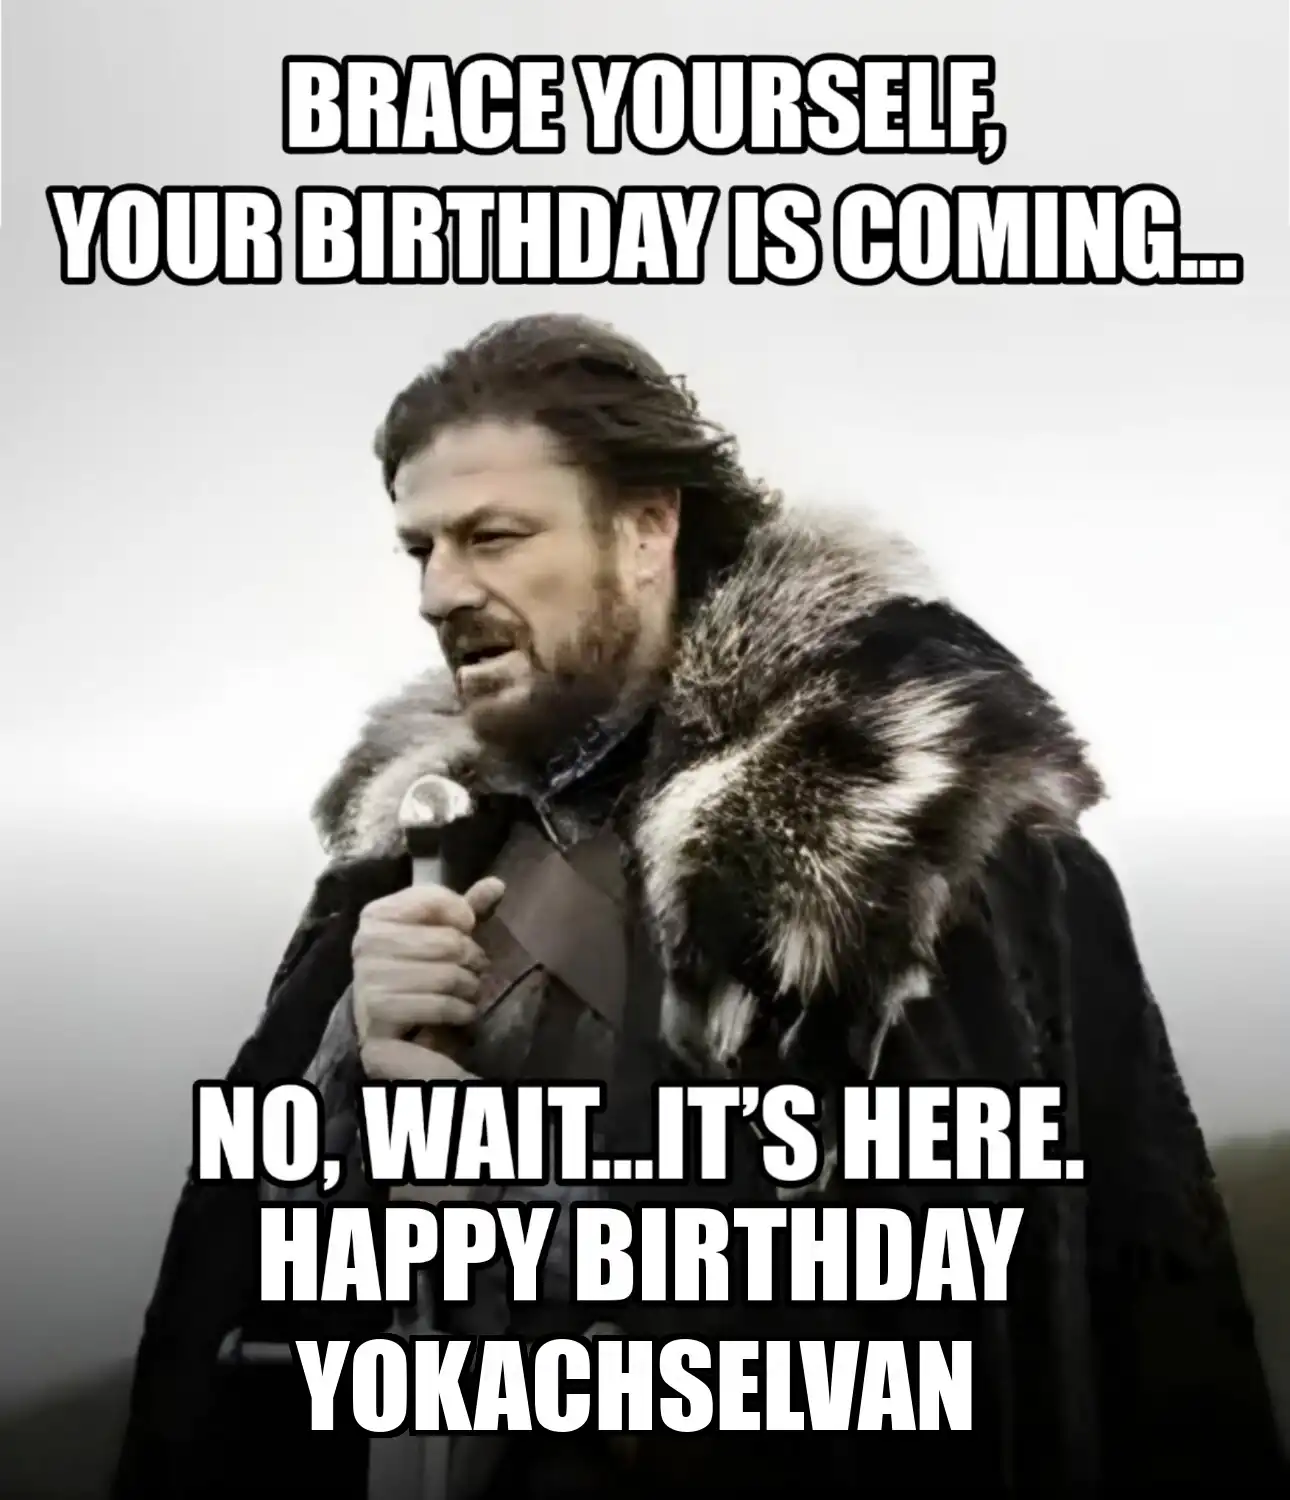 Happy Birthday Yokachselvan Brace Yourself Your Birthday Is Coming Meme